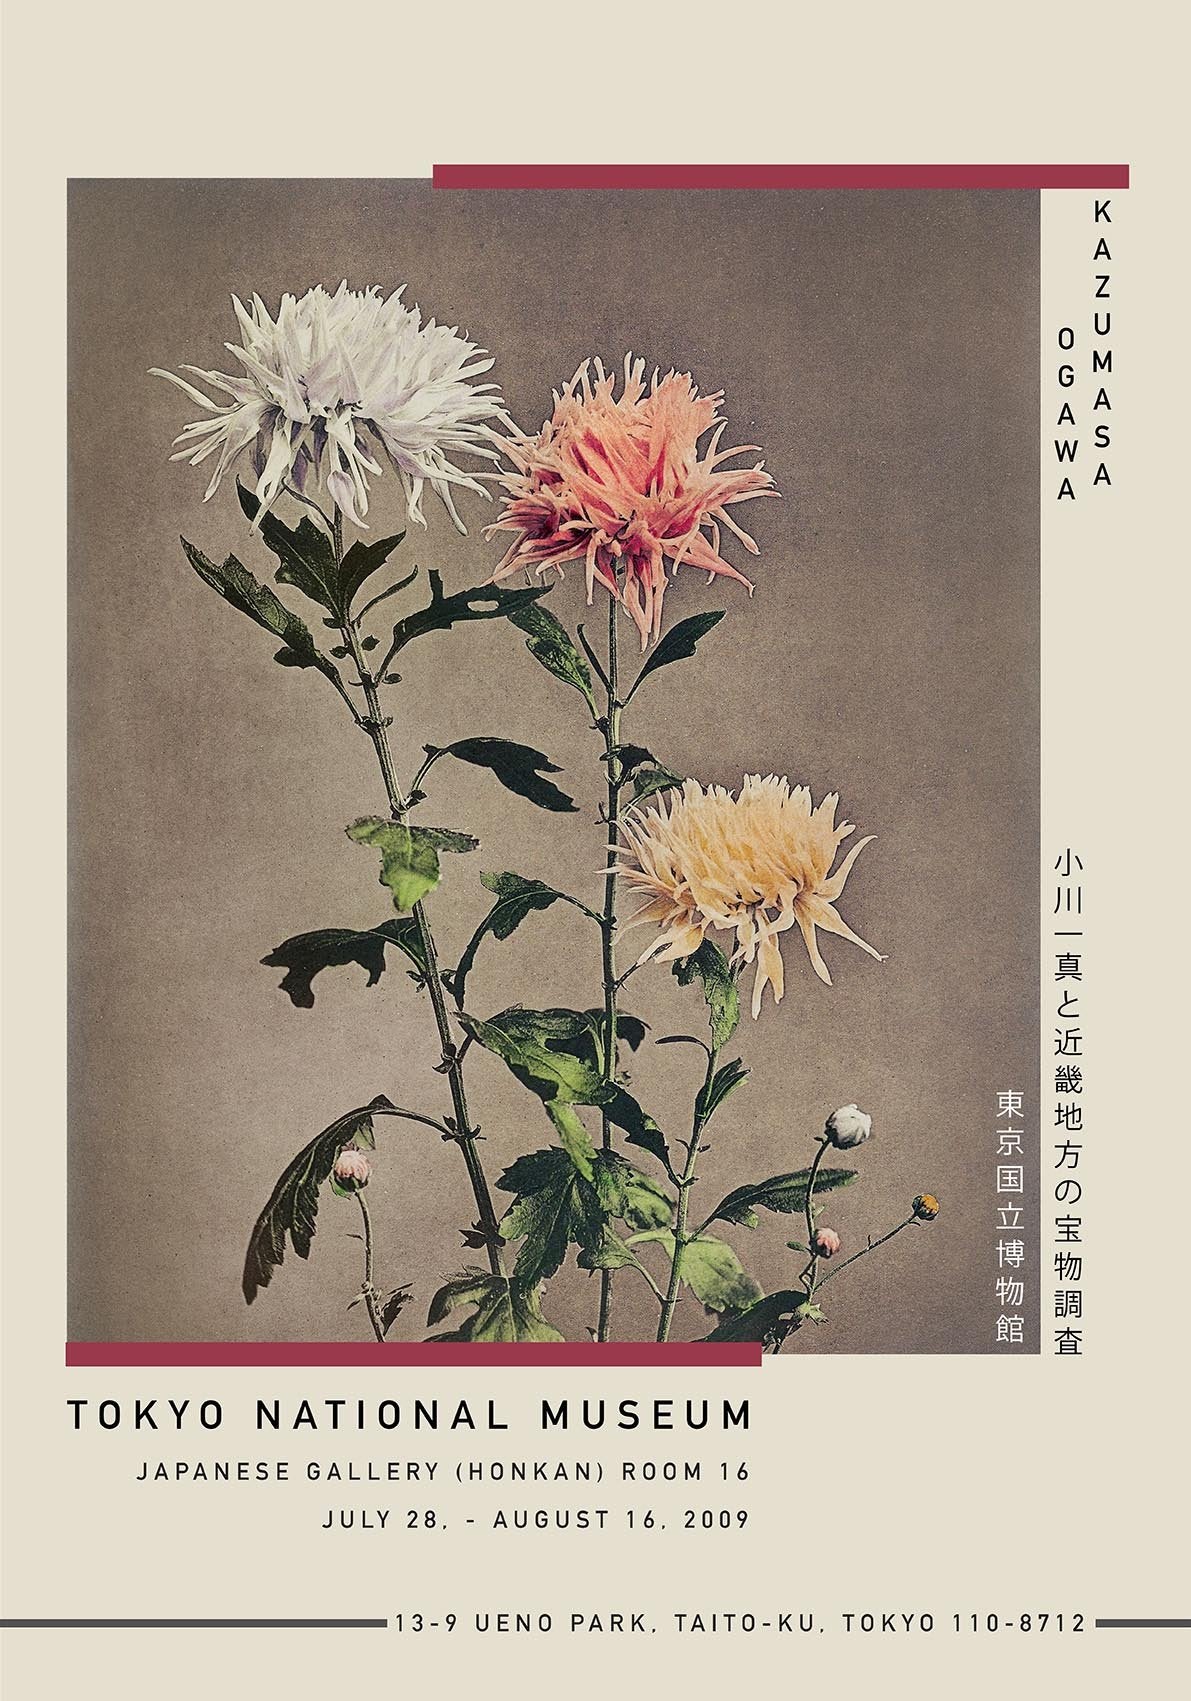 Kin-sui-ro by Kazumasa Exhibition Poster